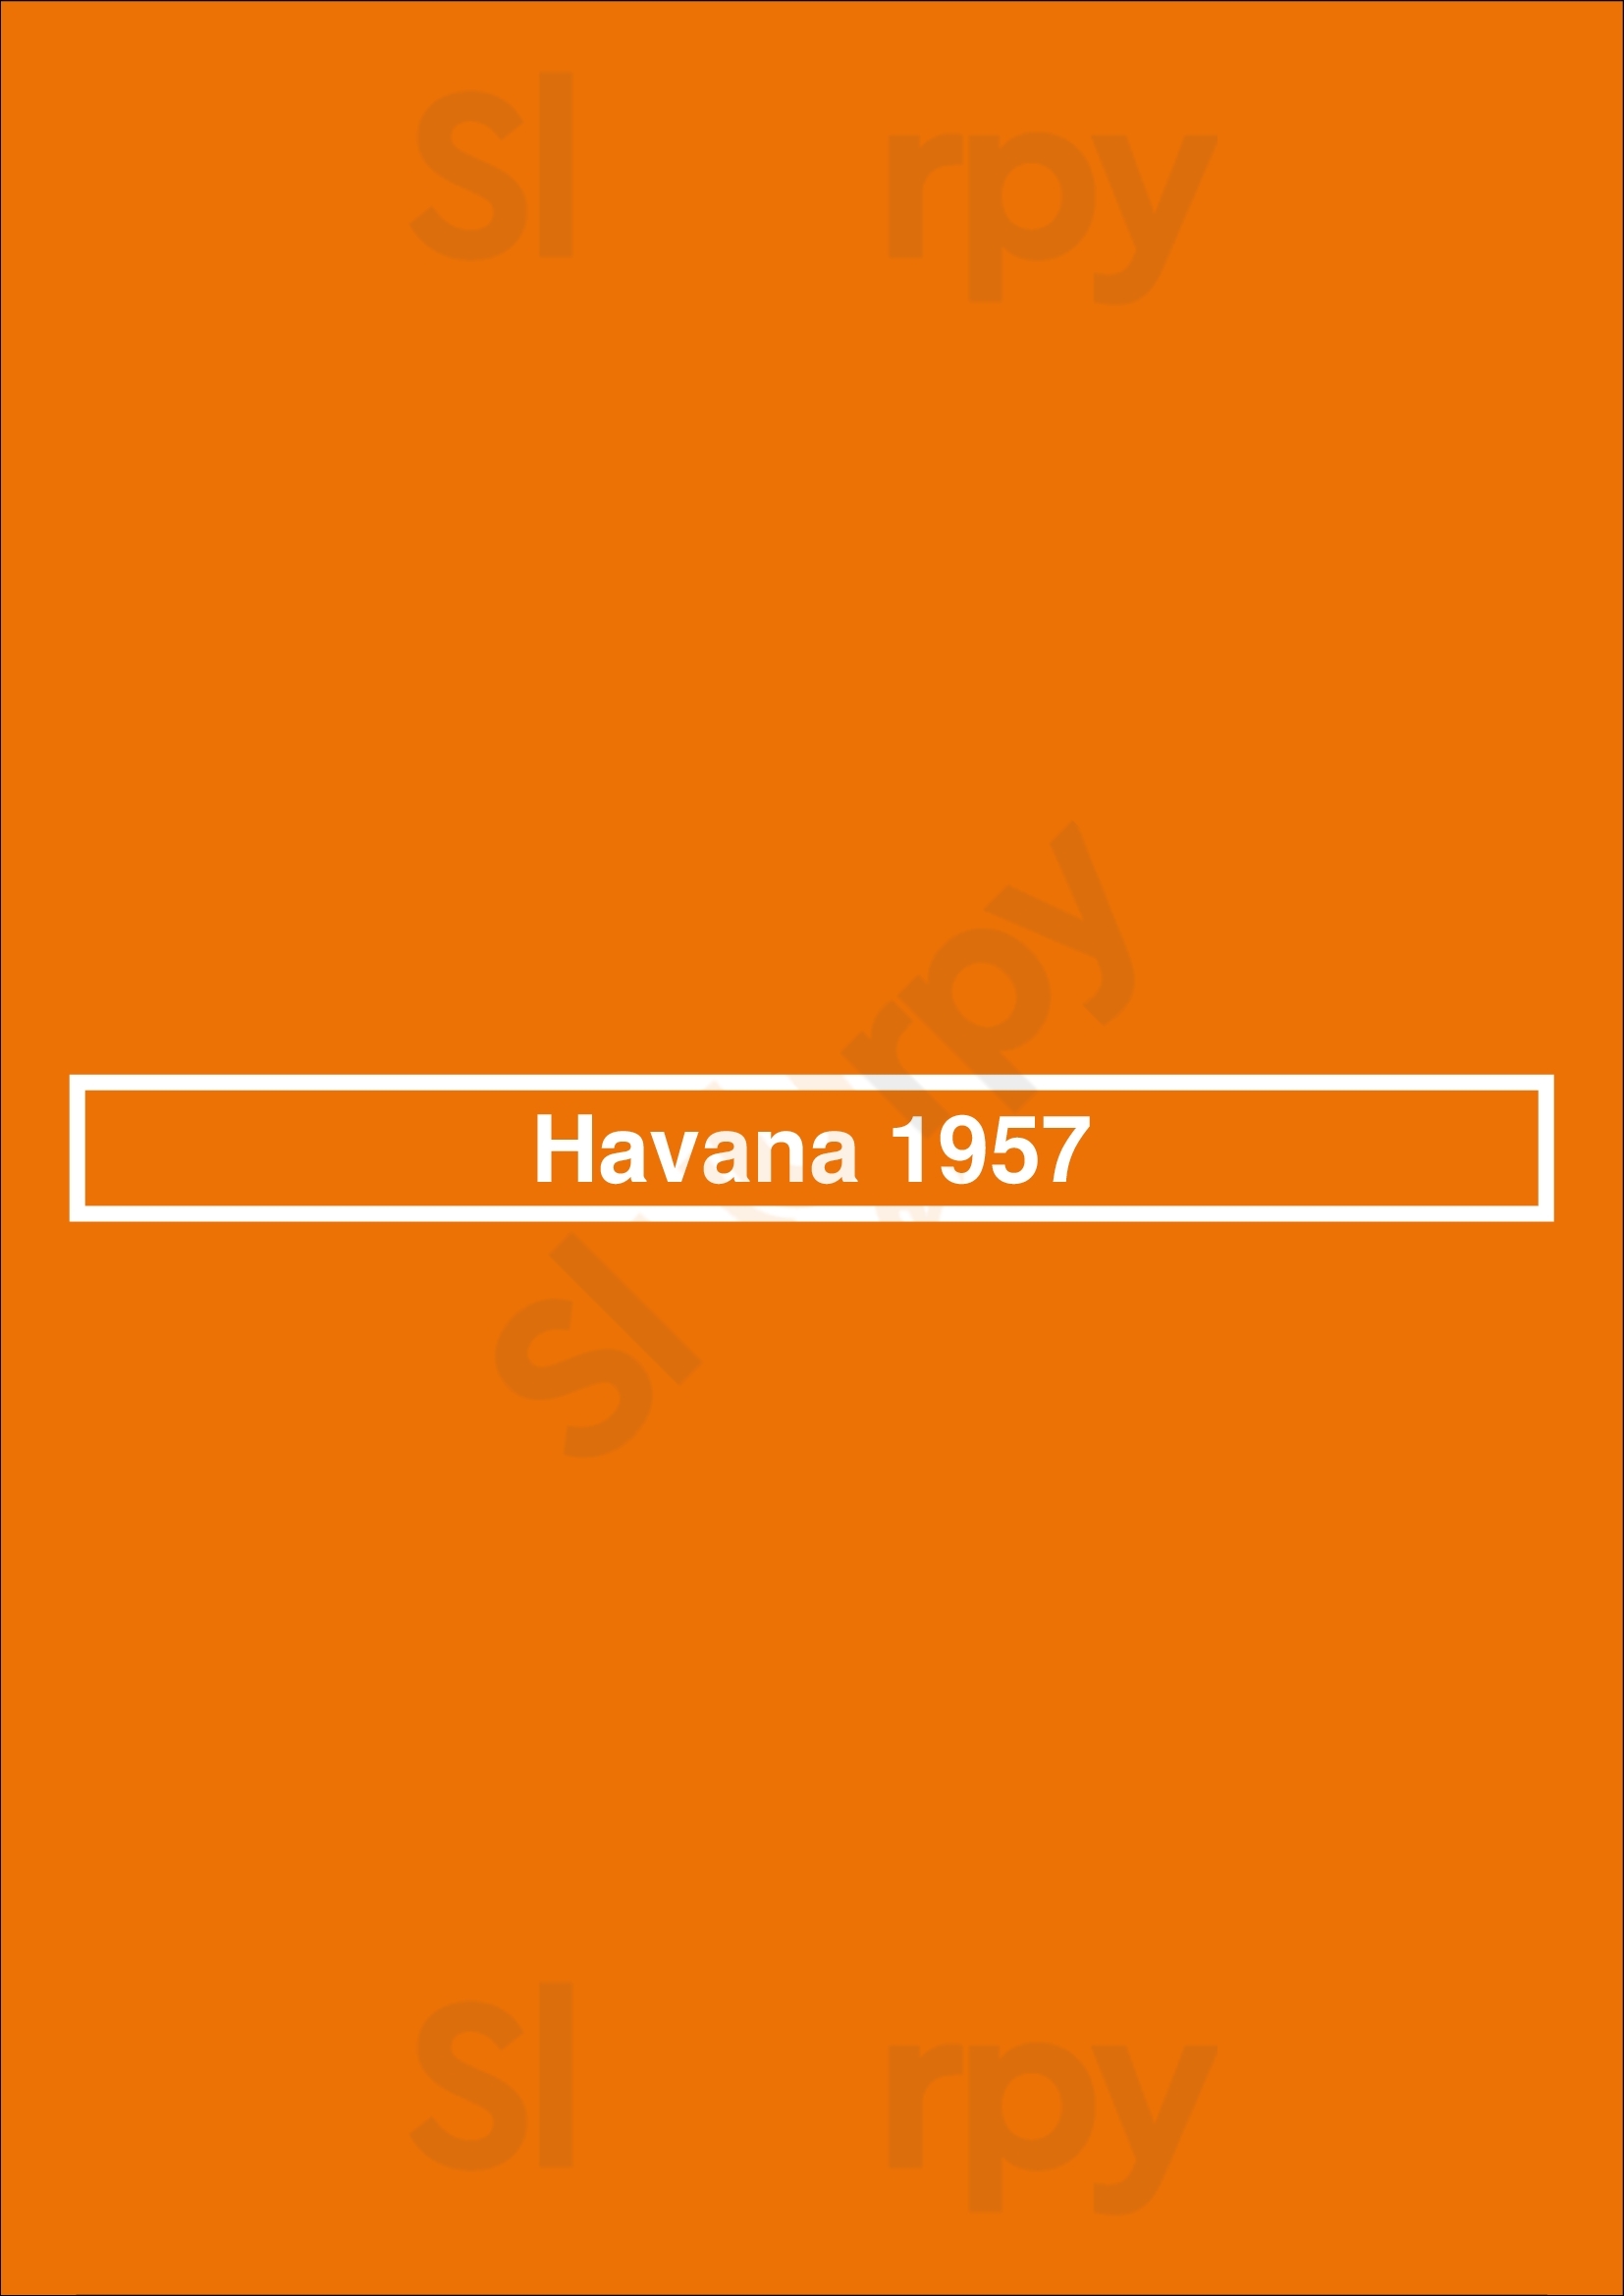 Havana 1957 Cuban Cuisine Ocean Drive Miami Beach Menu - 1